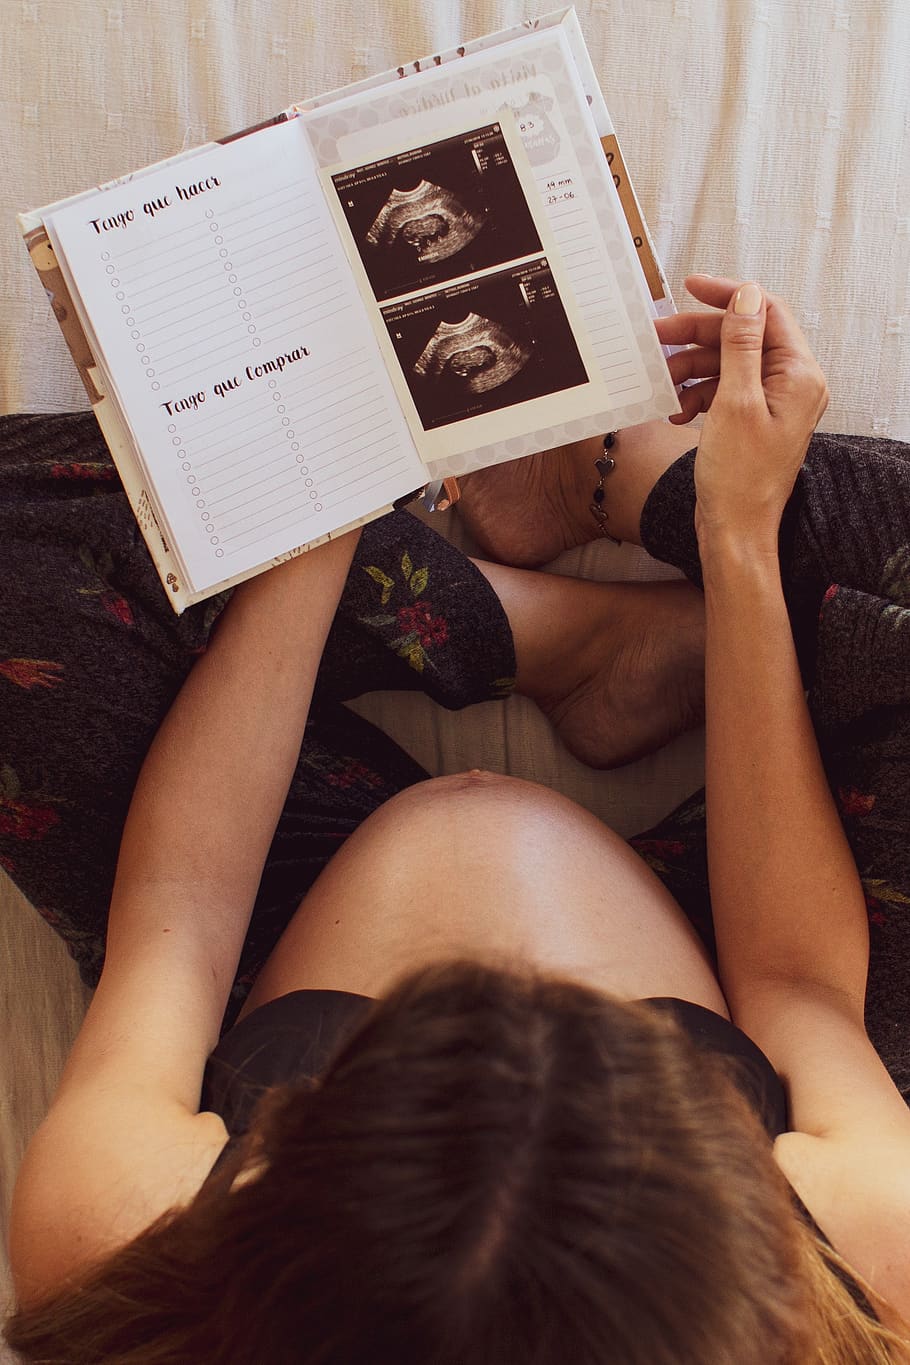 kehamilan, hamil, bayi, janin, ibu masa depan, ibu, ultrasound, cinta, keluarga, bahagia